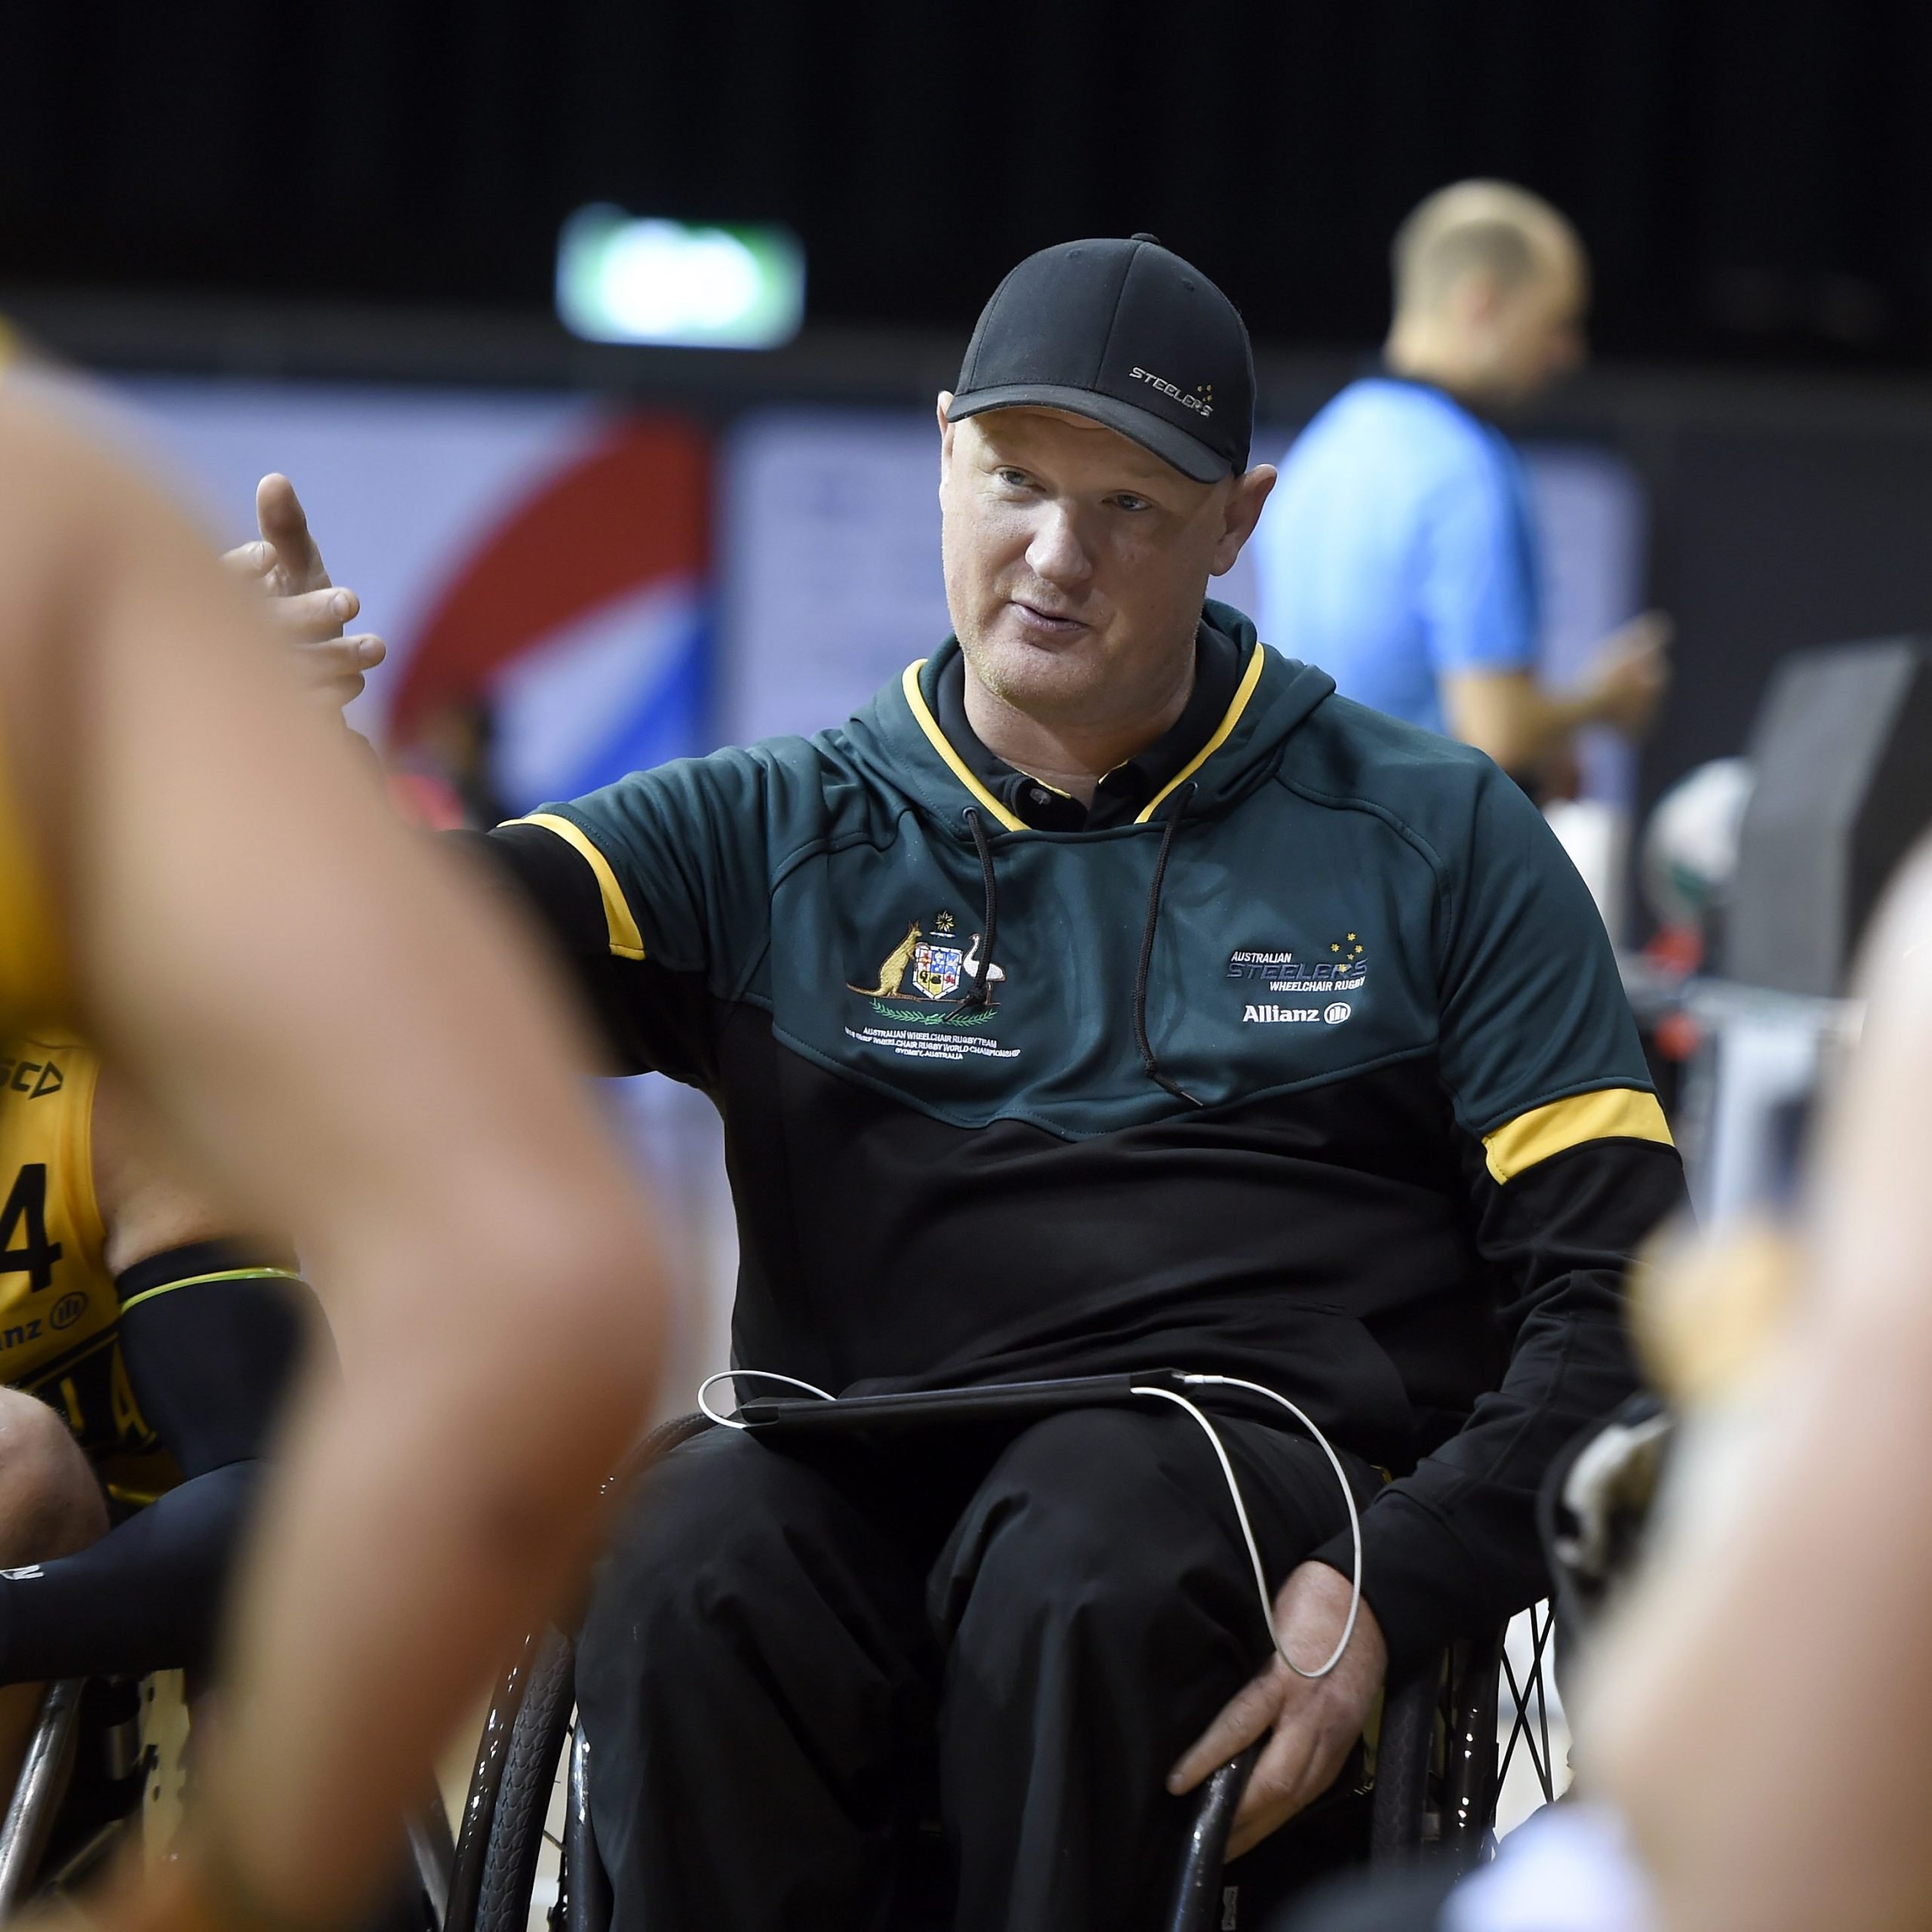 Australian Wheelchair Rugby Team - Paralympics Australia